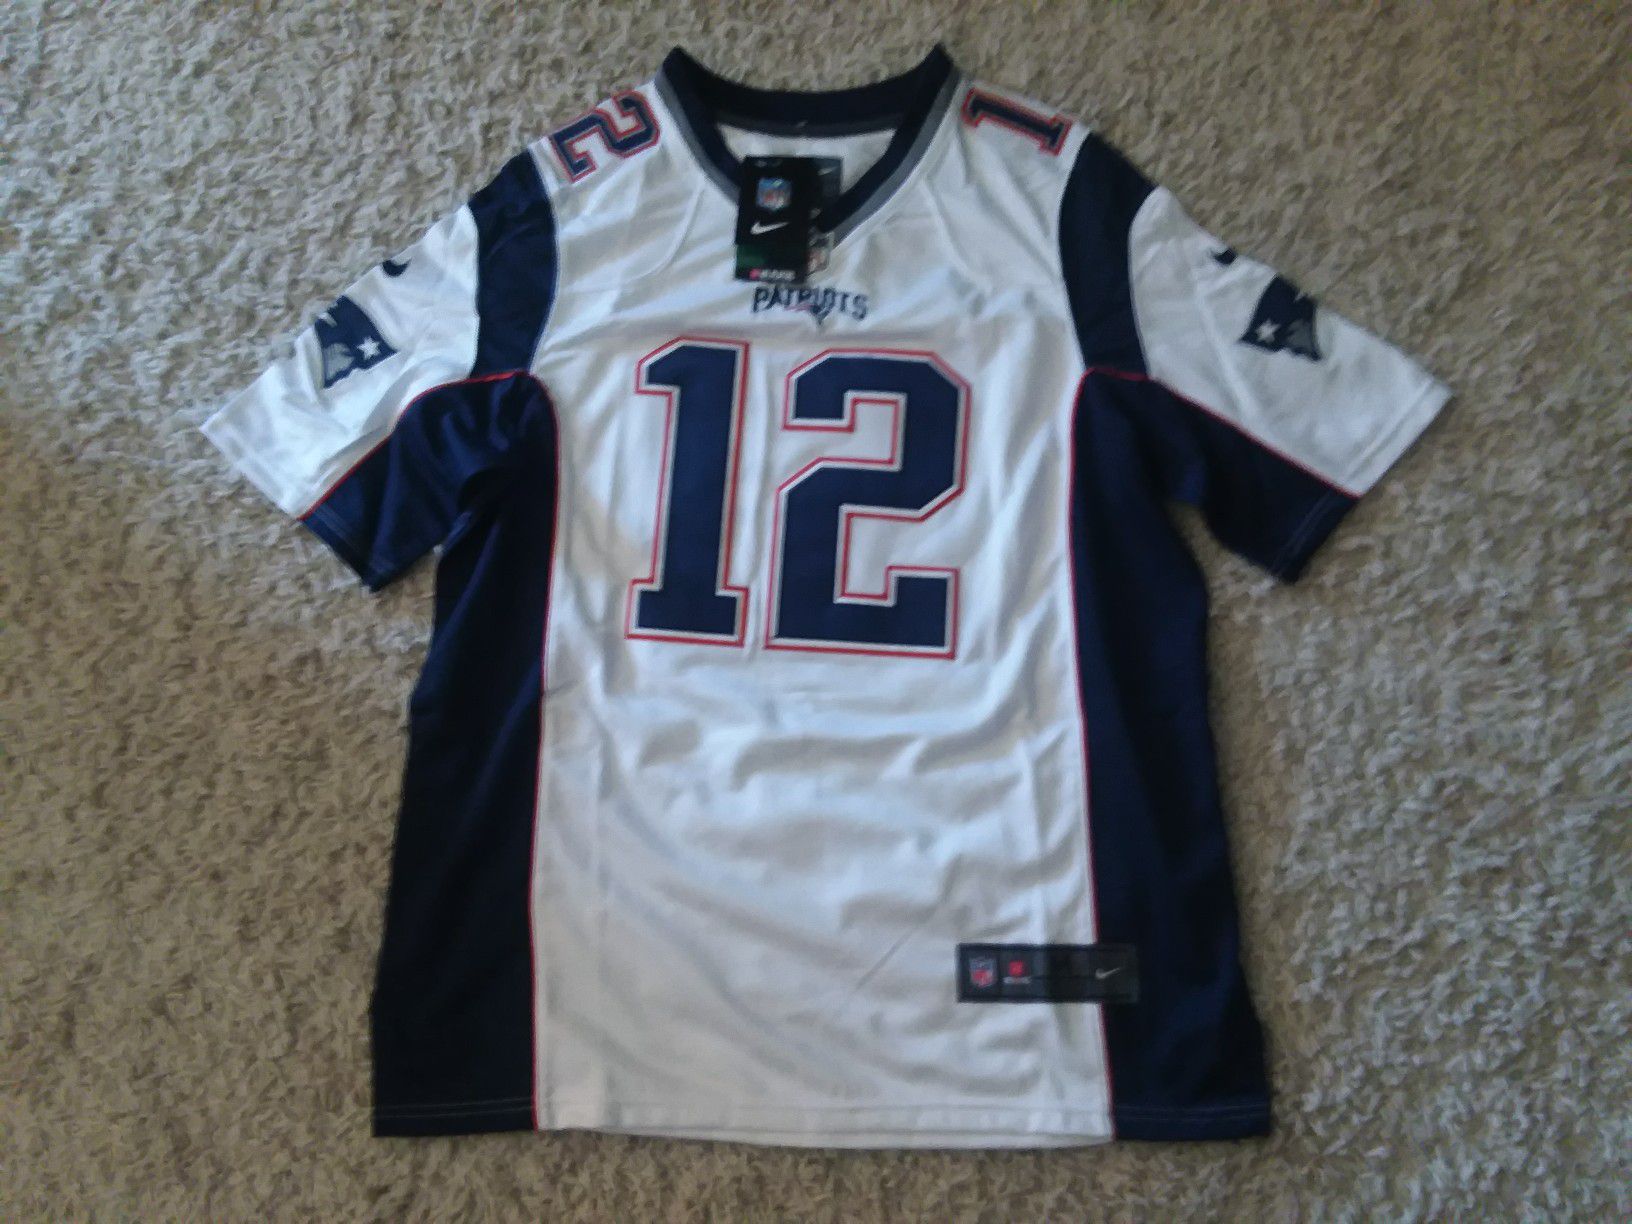 Brady Patriots jersey